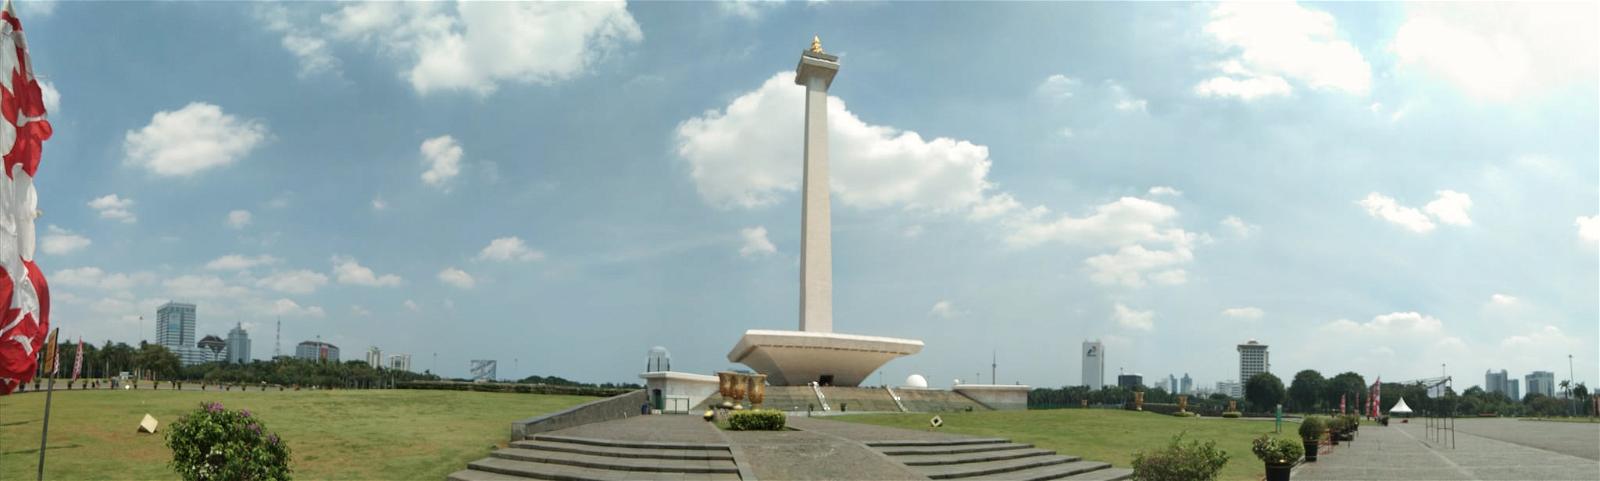 Monumen Nasional 의 이미지. 